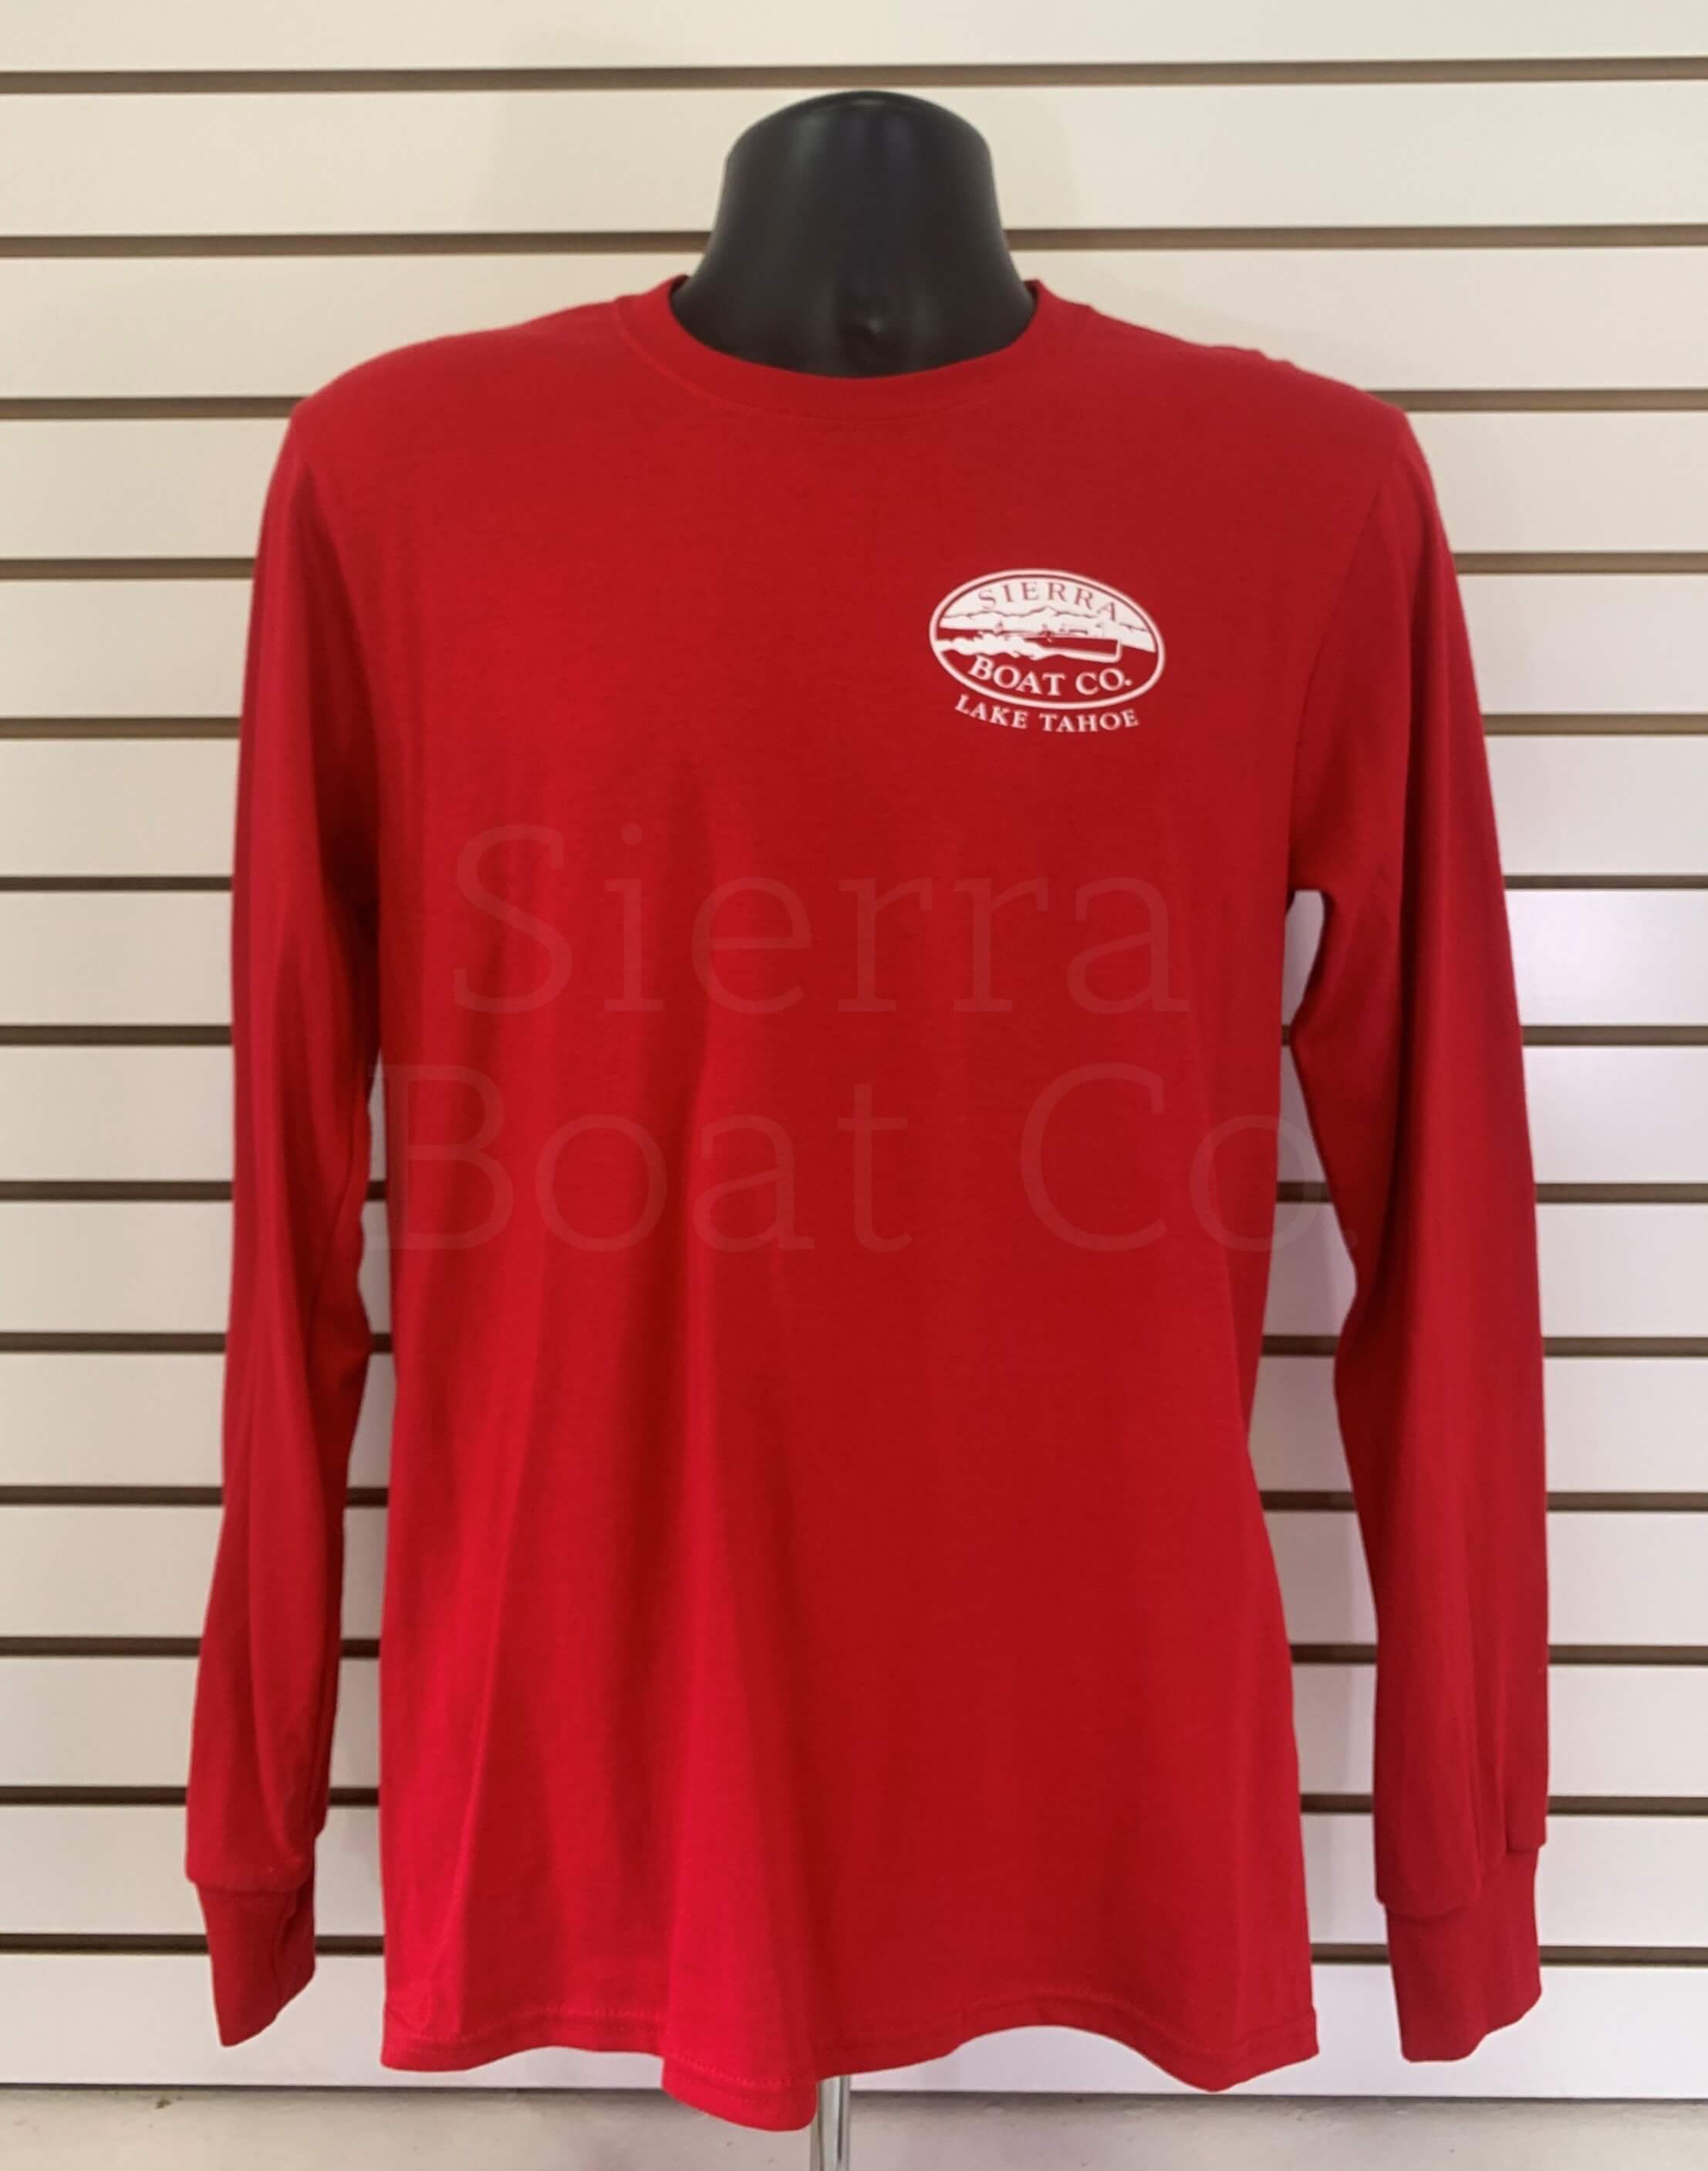 long Company Boat Sierra T-shirt. red - Classic sleeve